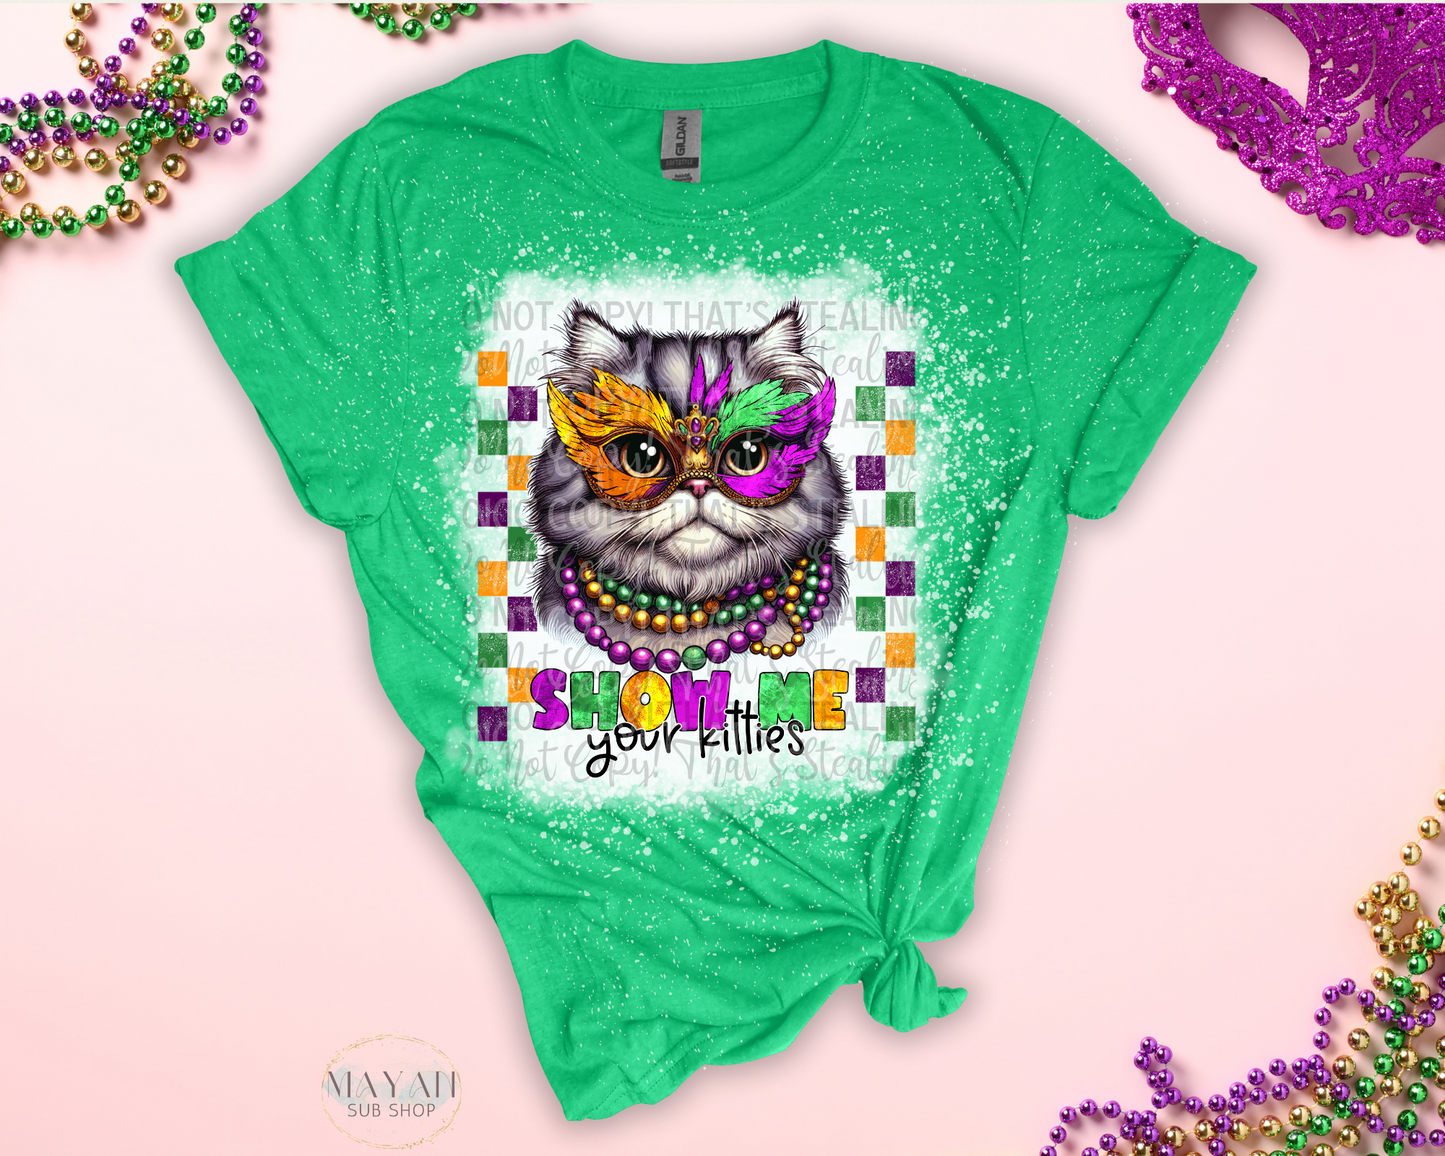 Show Me Your Kitties Bleached Shirt - Mayan Sub Shop